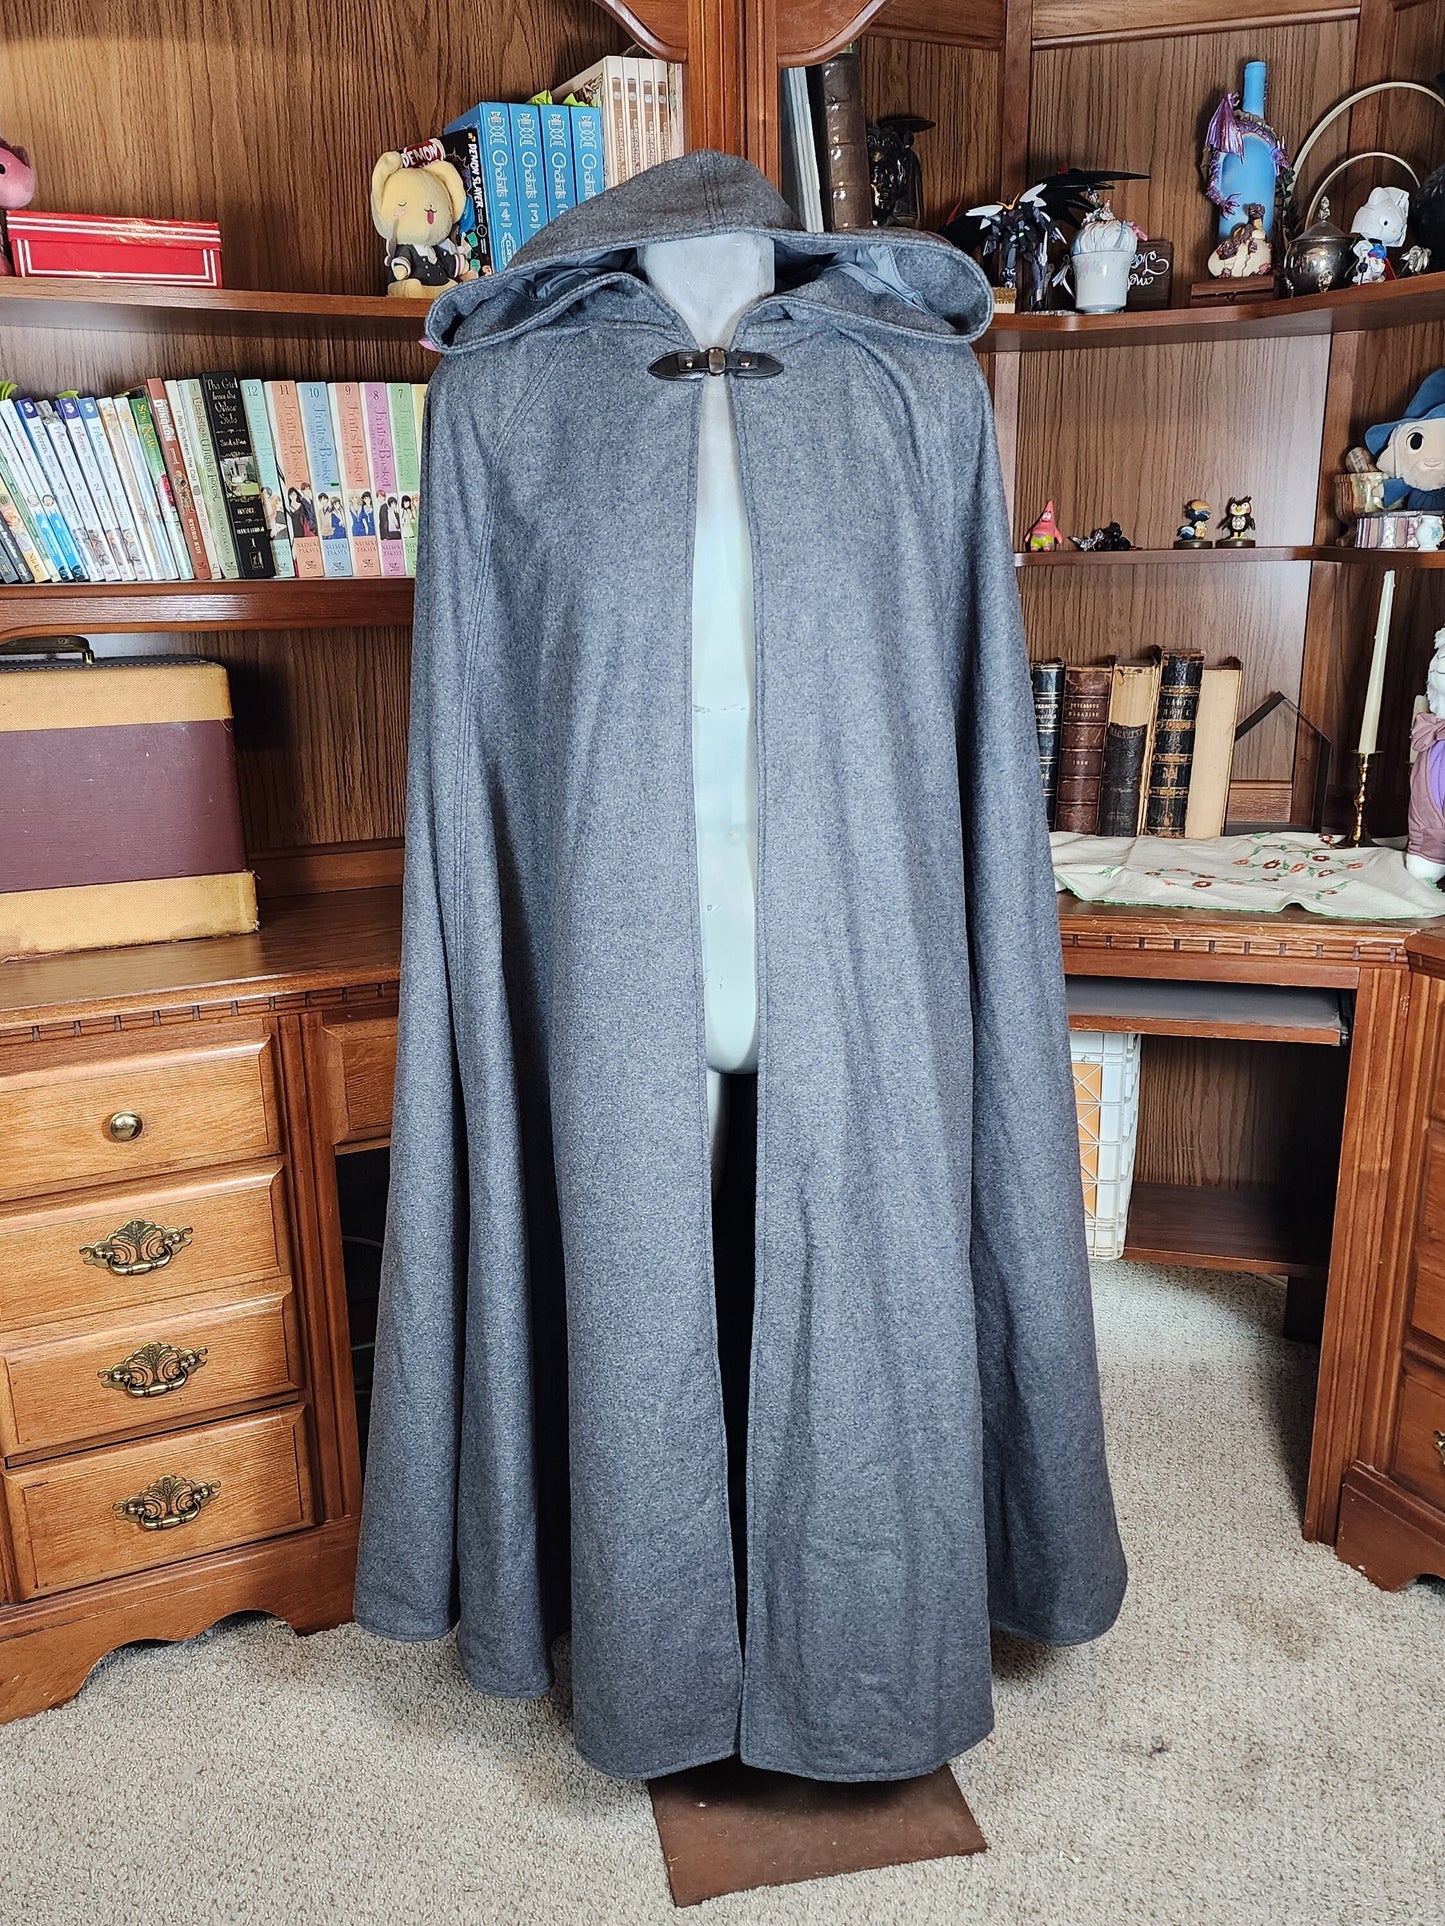 Winter Wanderer Cloak- Grey cloak with Black water resistant lining